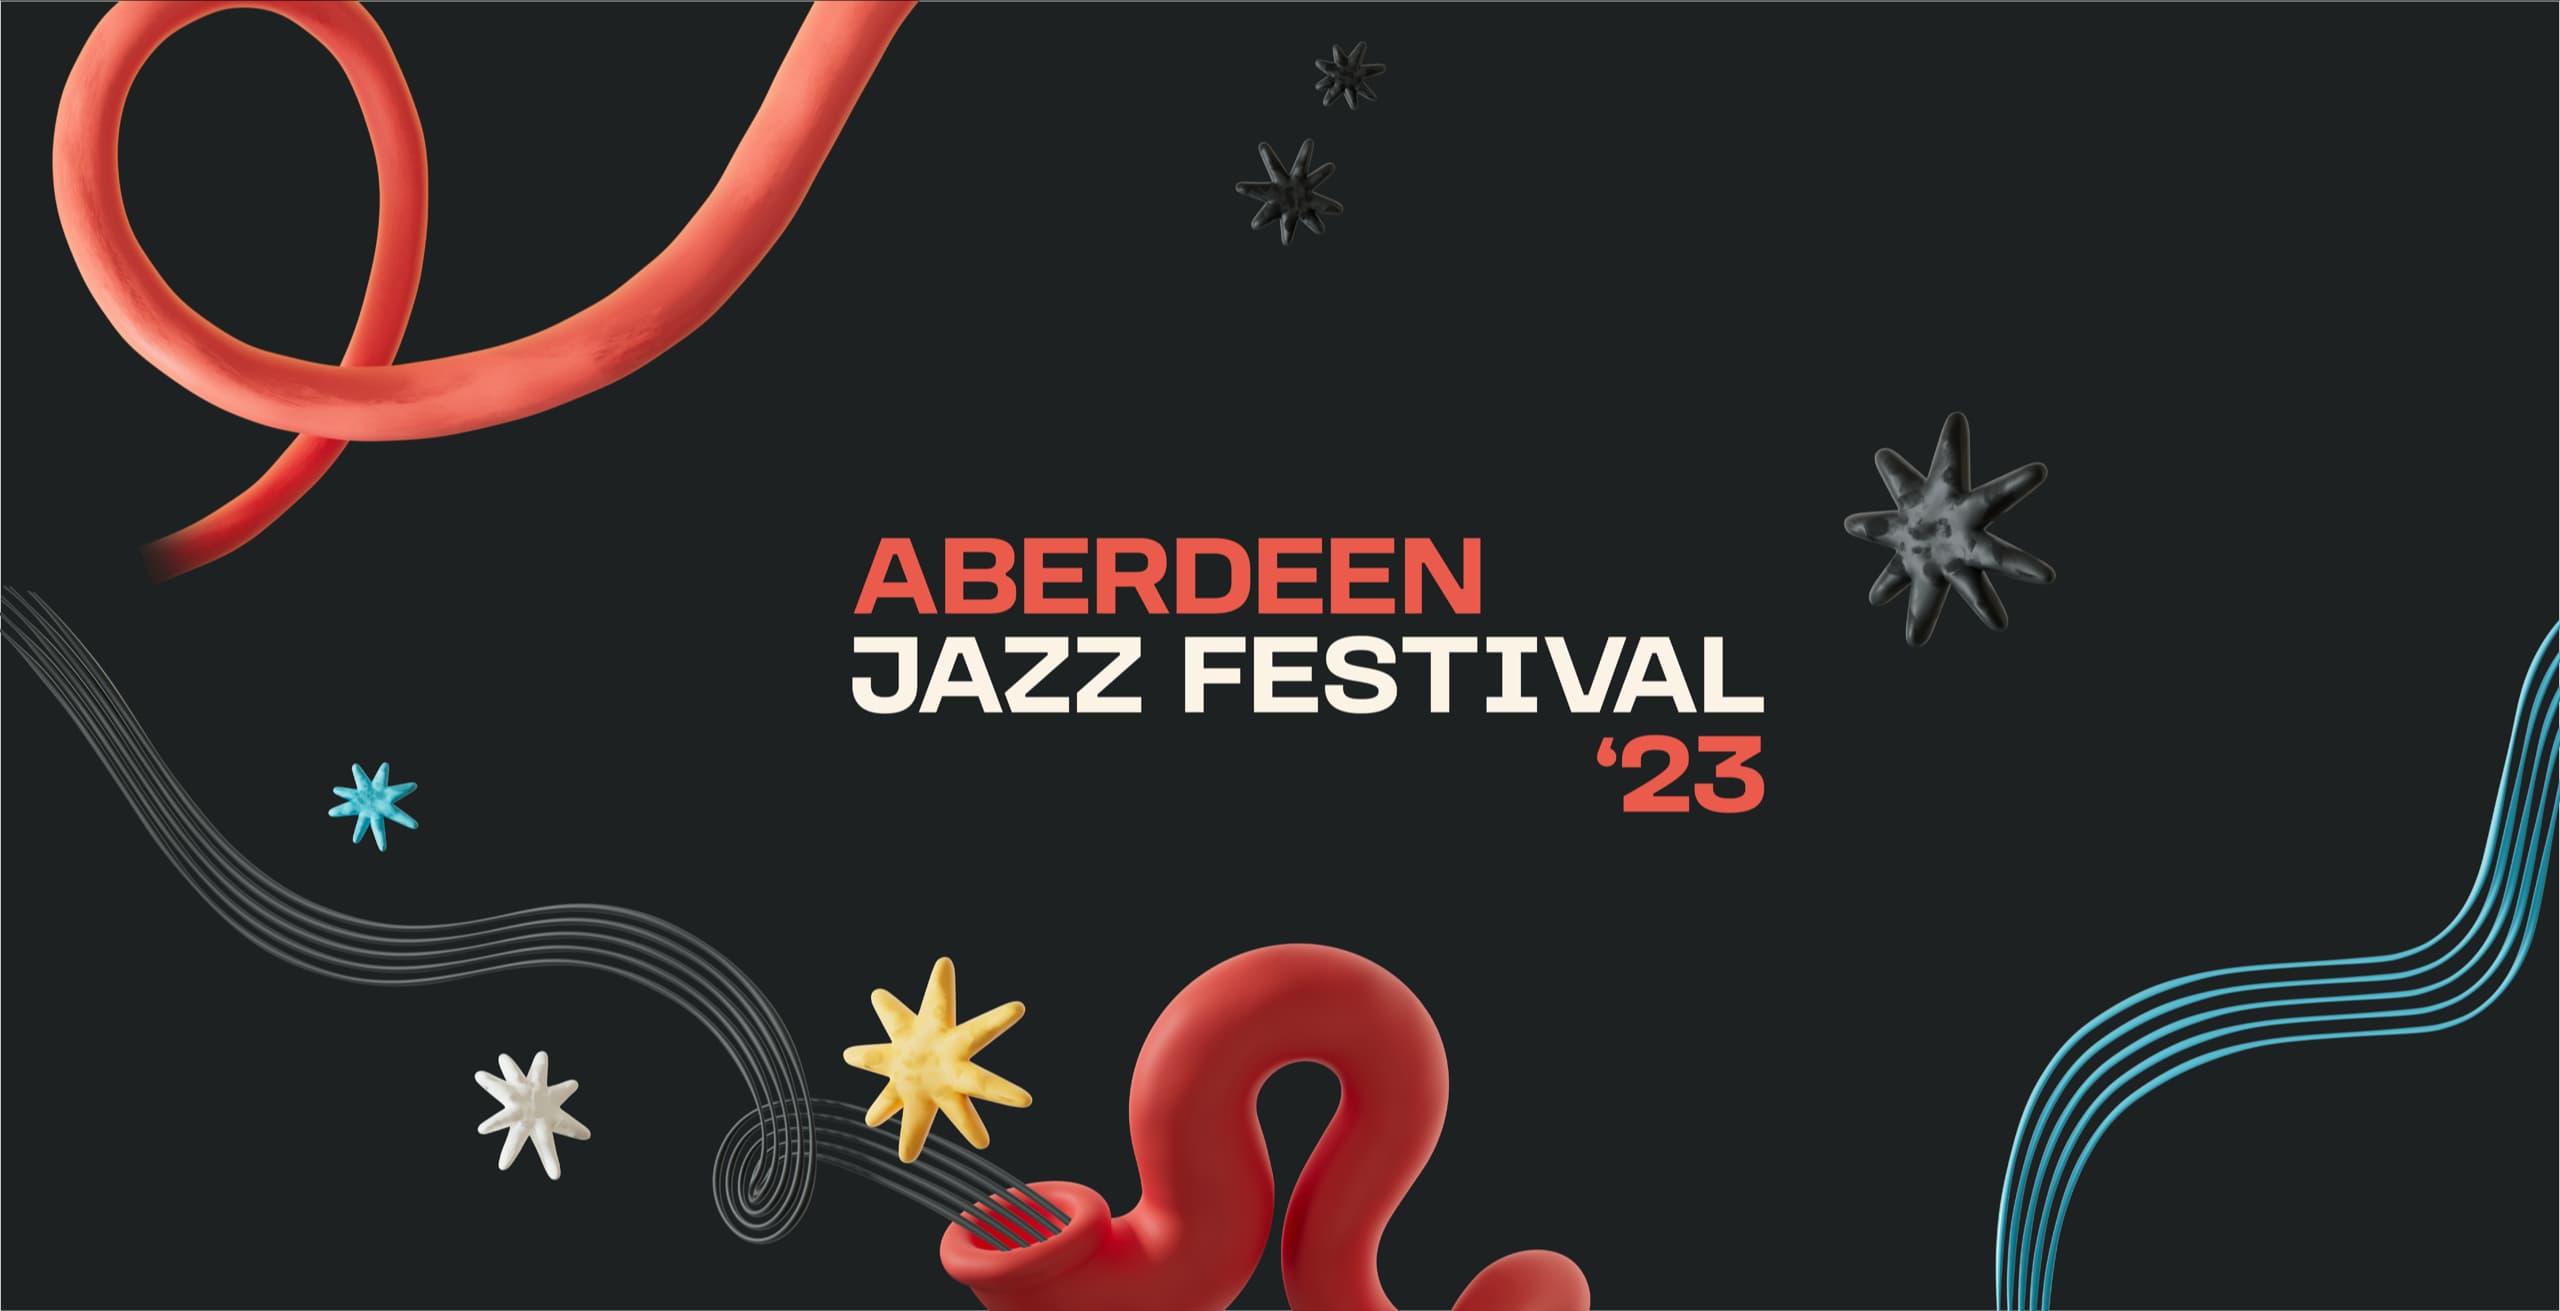 Aberdeen Jazz Fest: brand, digital & live performance